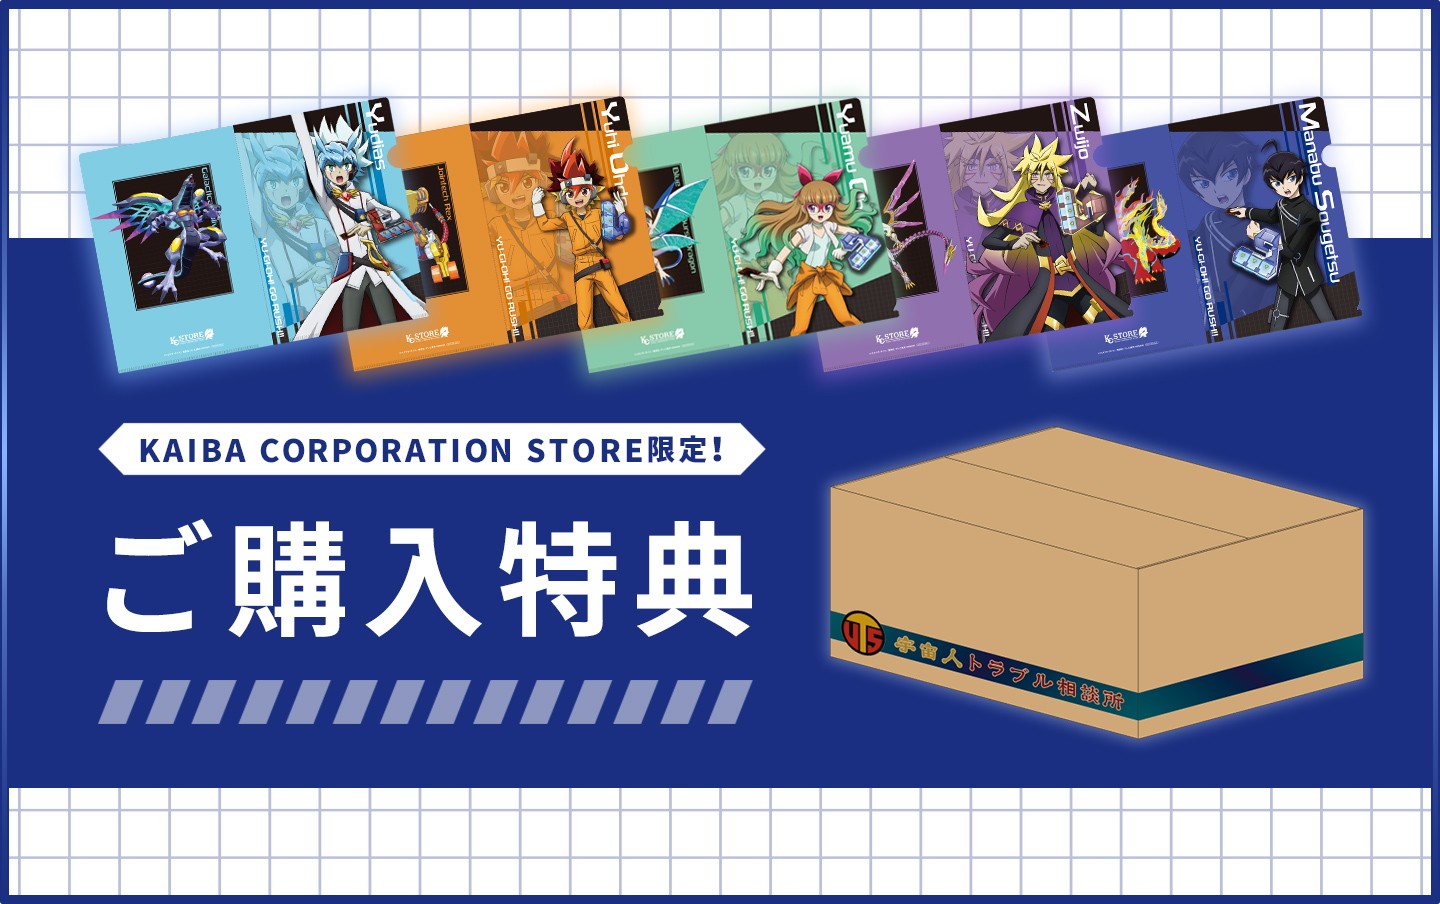 KAIBA CORPORATION STORE 特製ボックスで商品が届く！